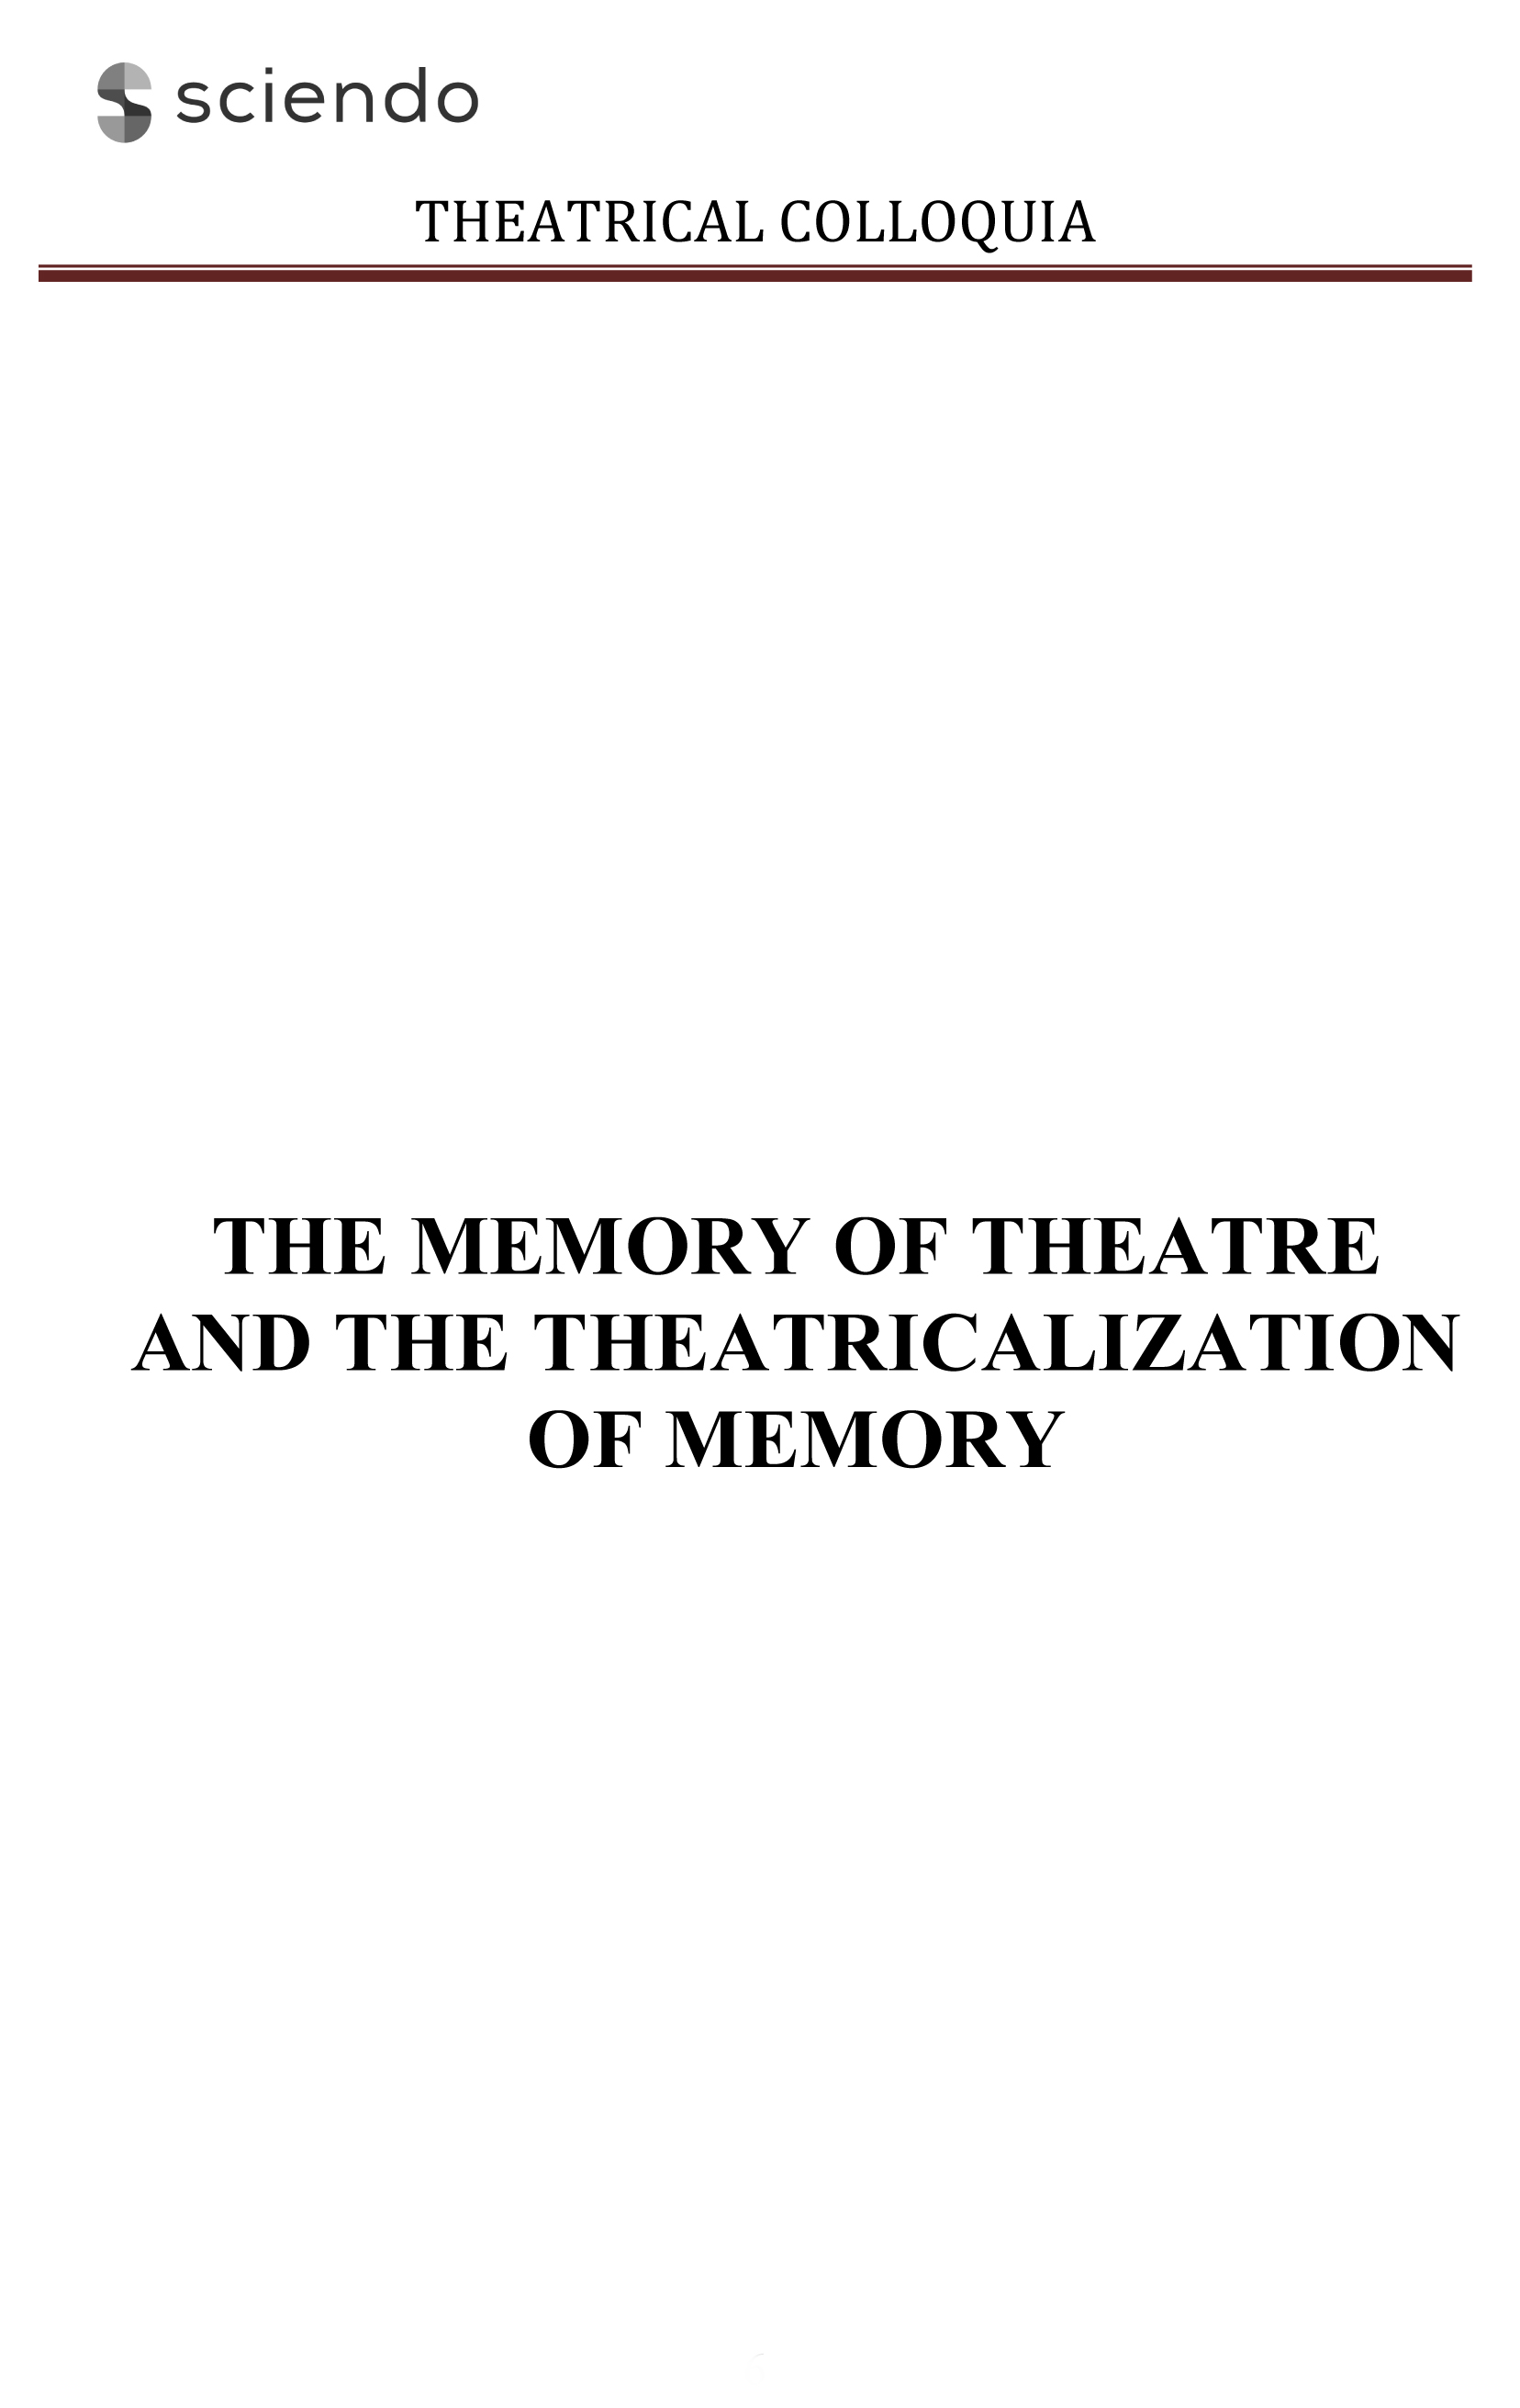 Theatre Criticism – a Still Image of a Time